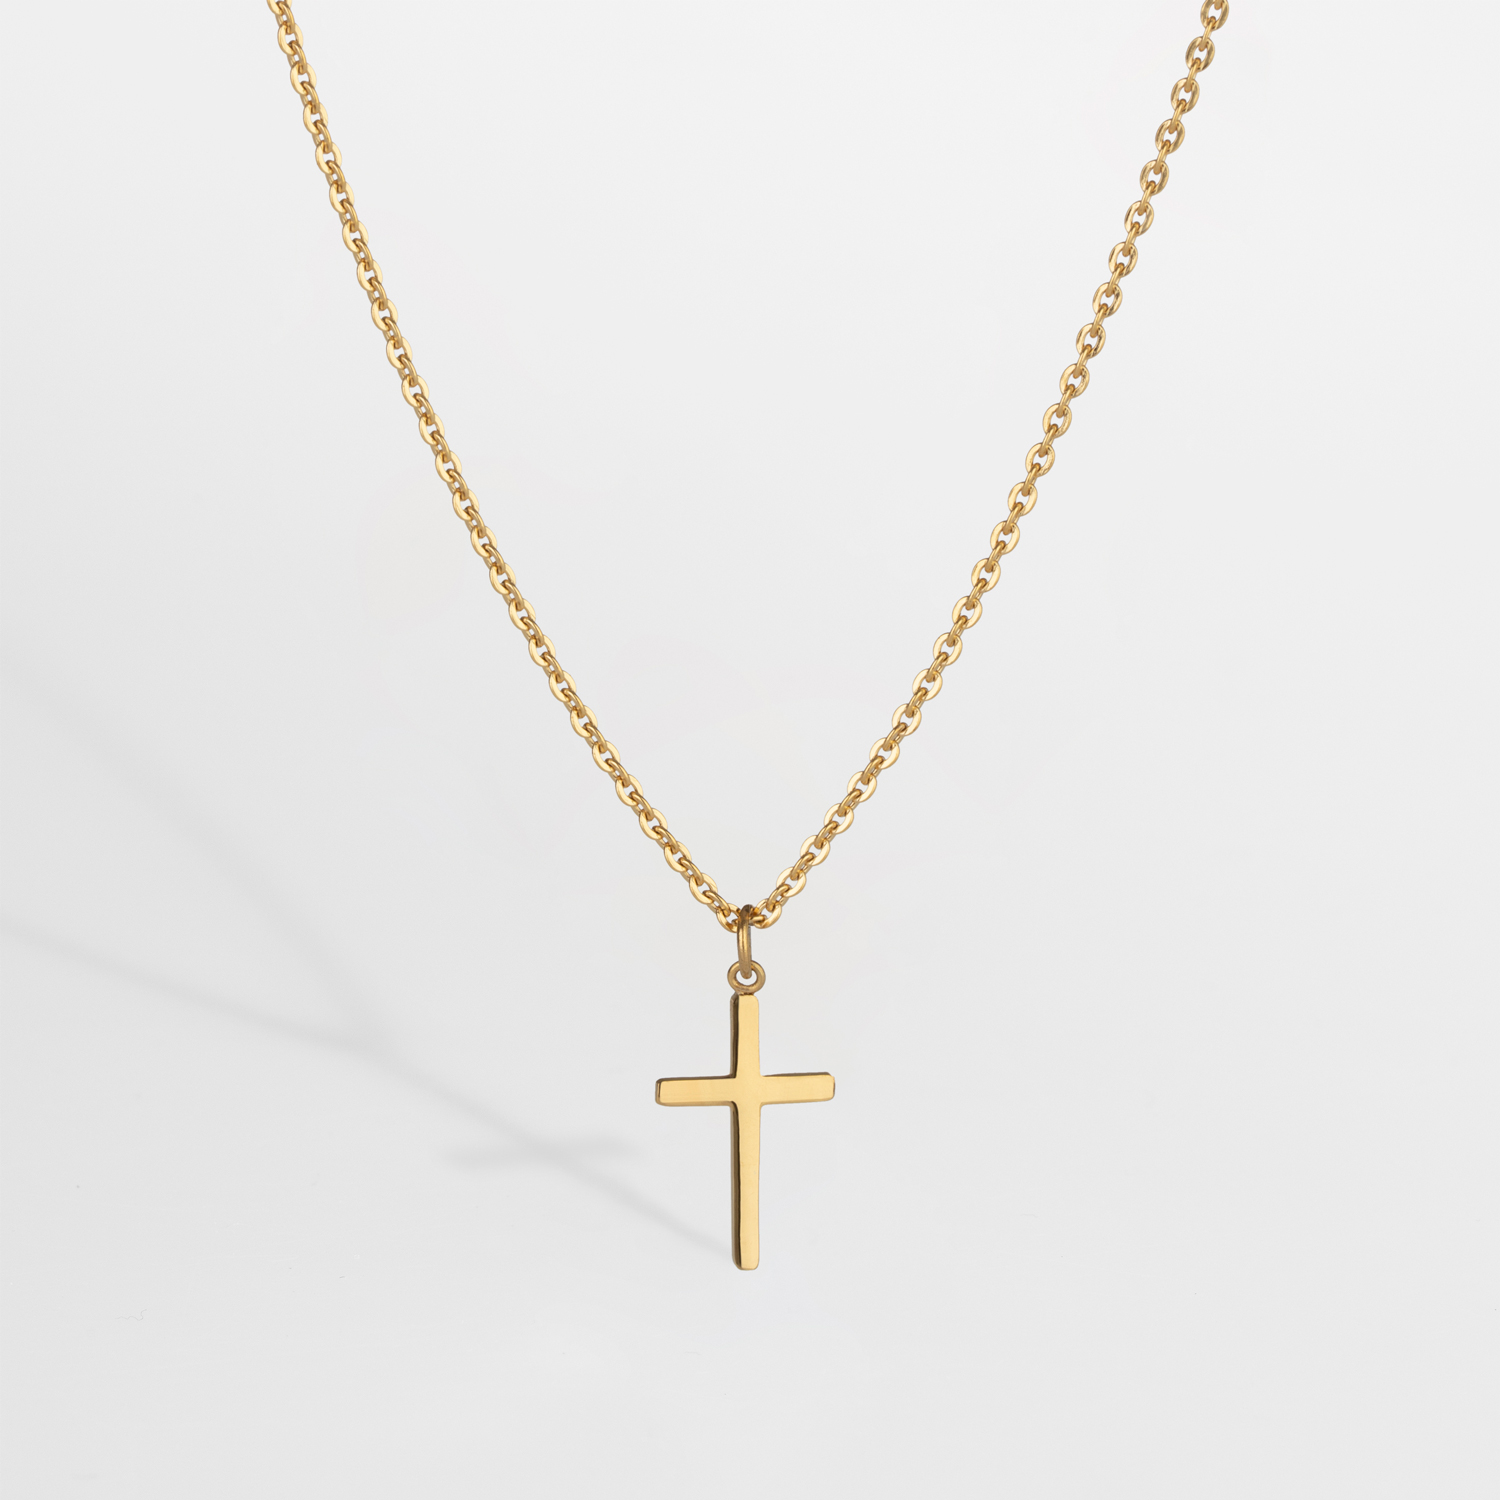 NL Cross chain - Gold tone - New 